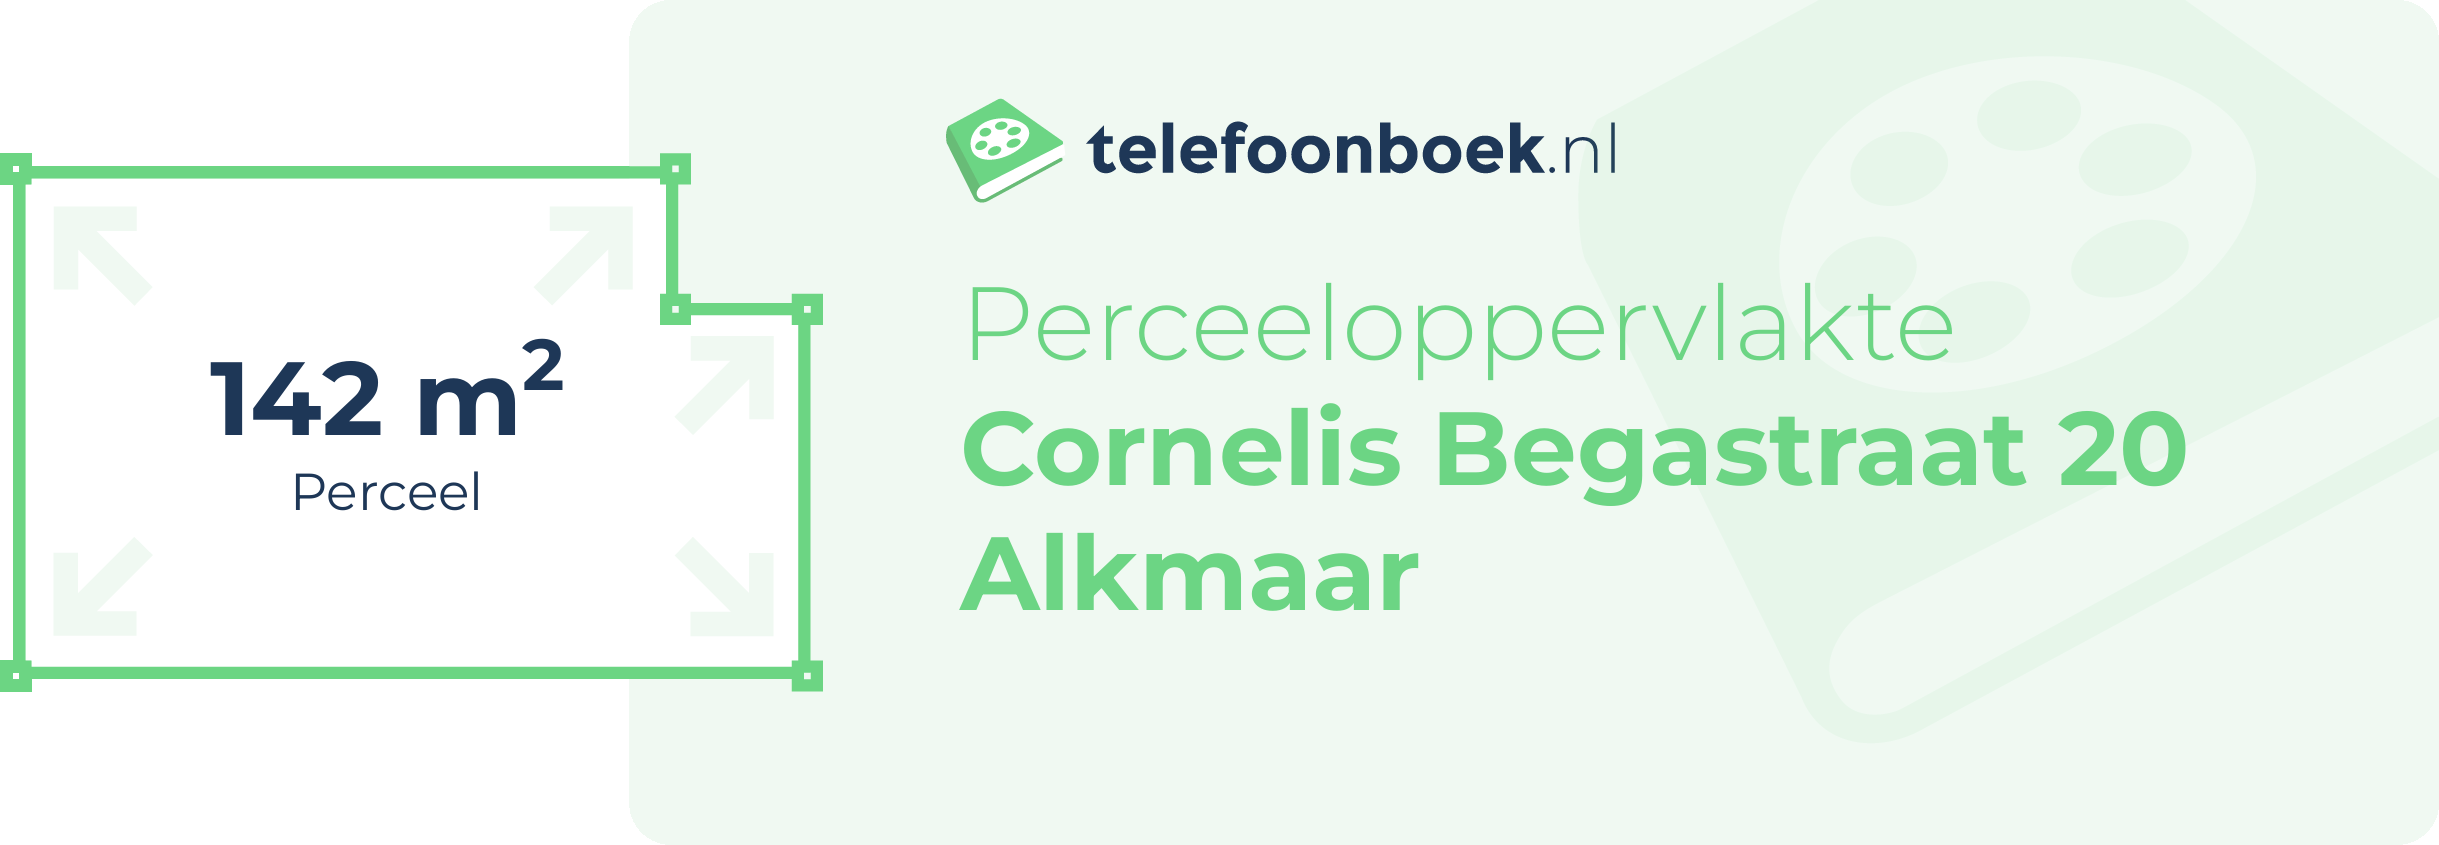 Perceeloppervlakte Cornelis Begastraat 20 Alkmaar